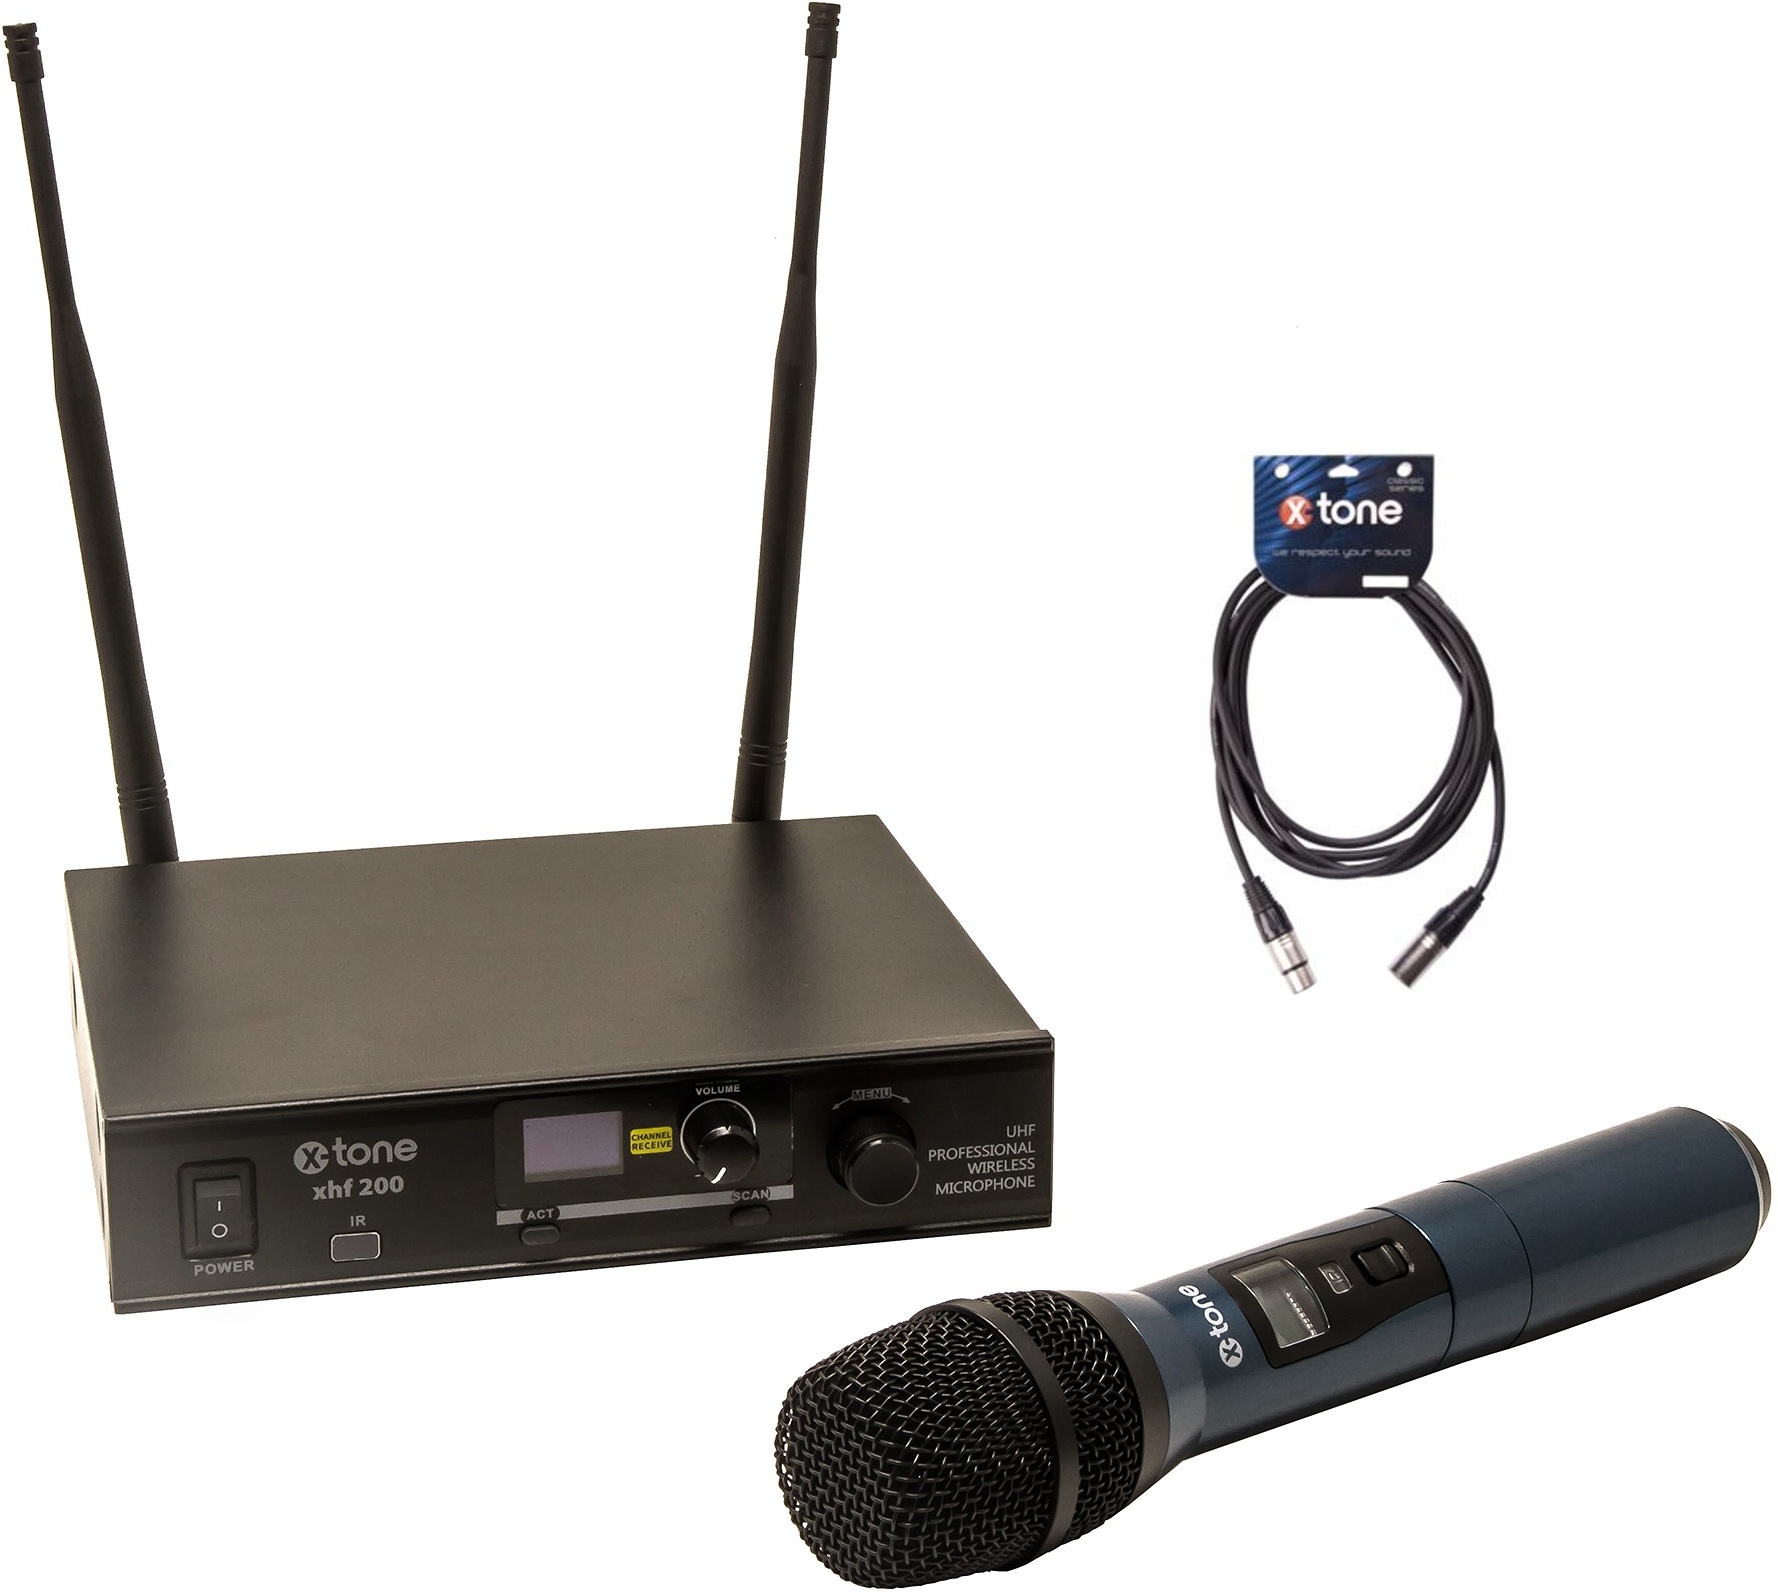 X-tone Xhf200 Systeme Hf Main Multi Frequences + X-tone Xlr Xlr3 M - Wireless handheld microphone - Main picture